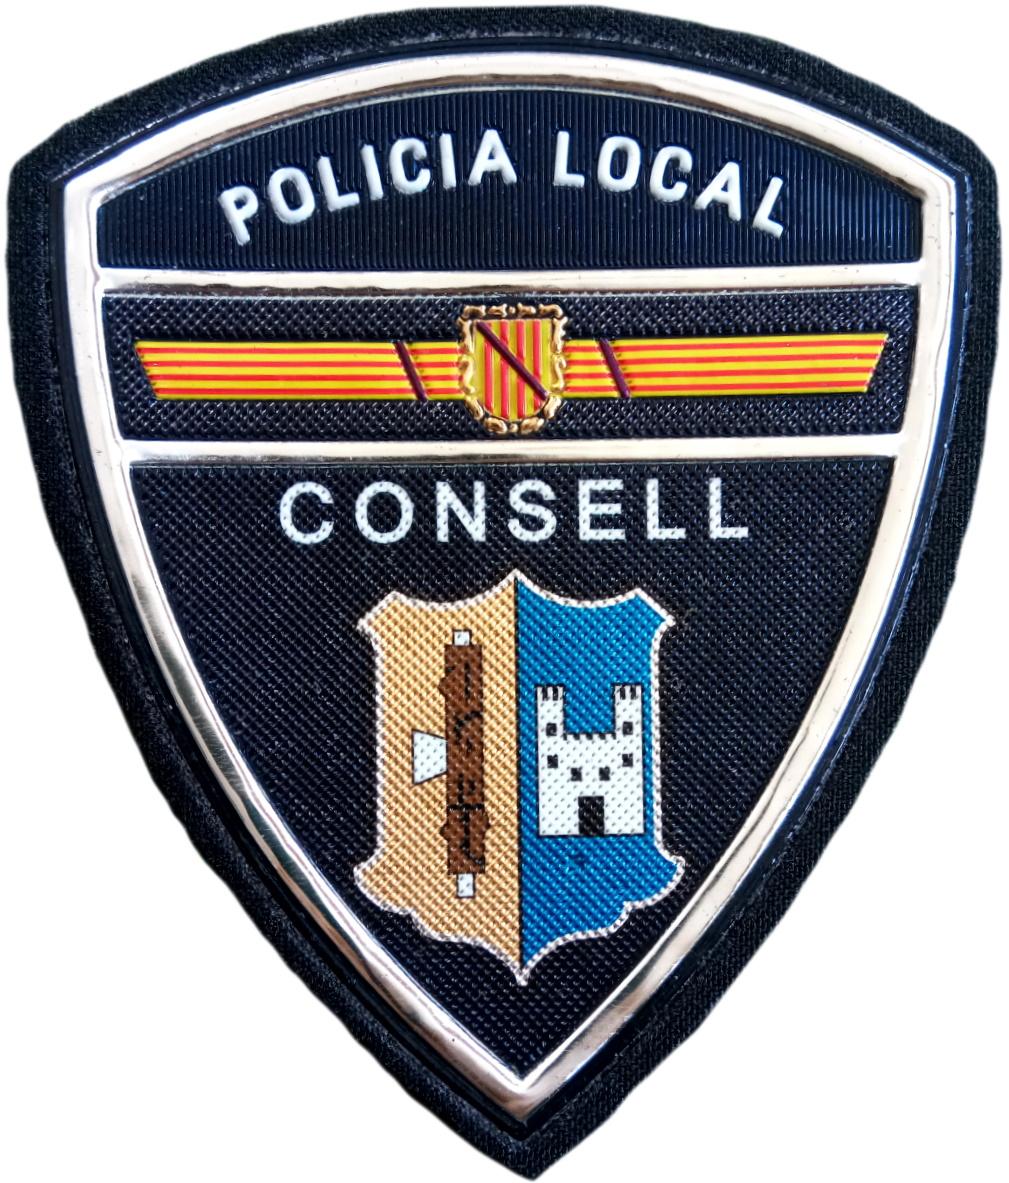 Policía Local Consell parche insignia emblema distintivo